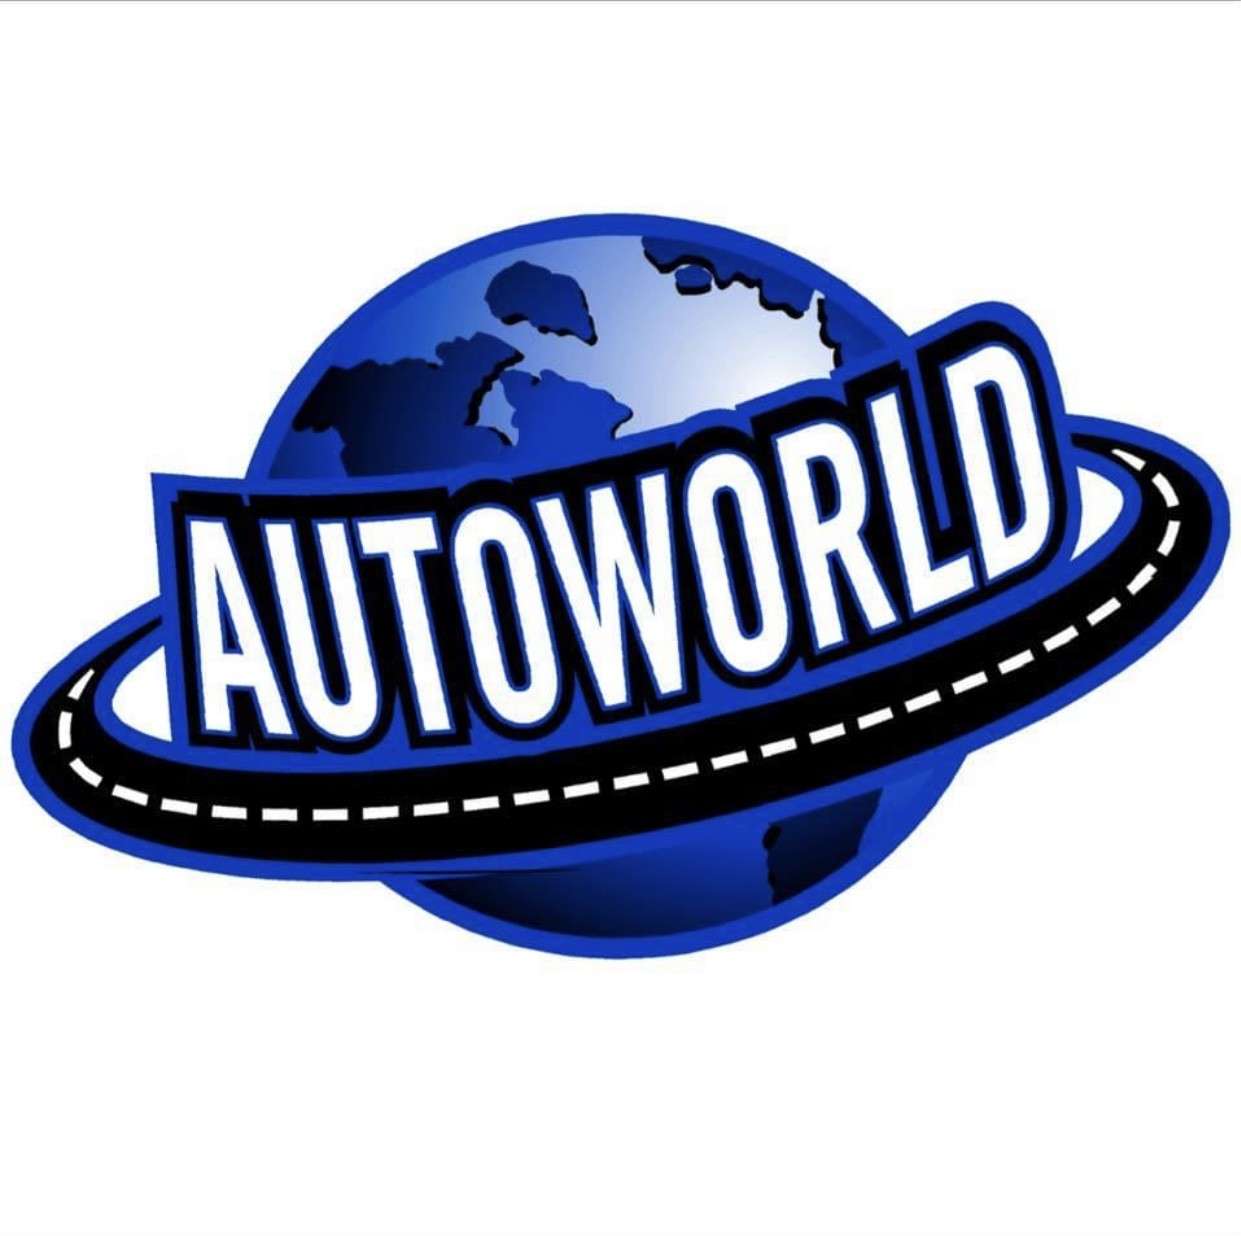 Autoworld Logo